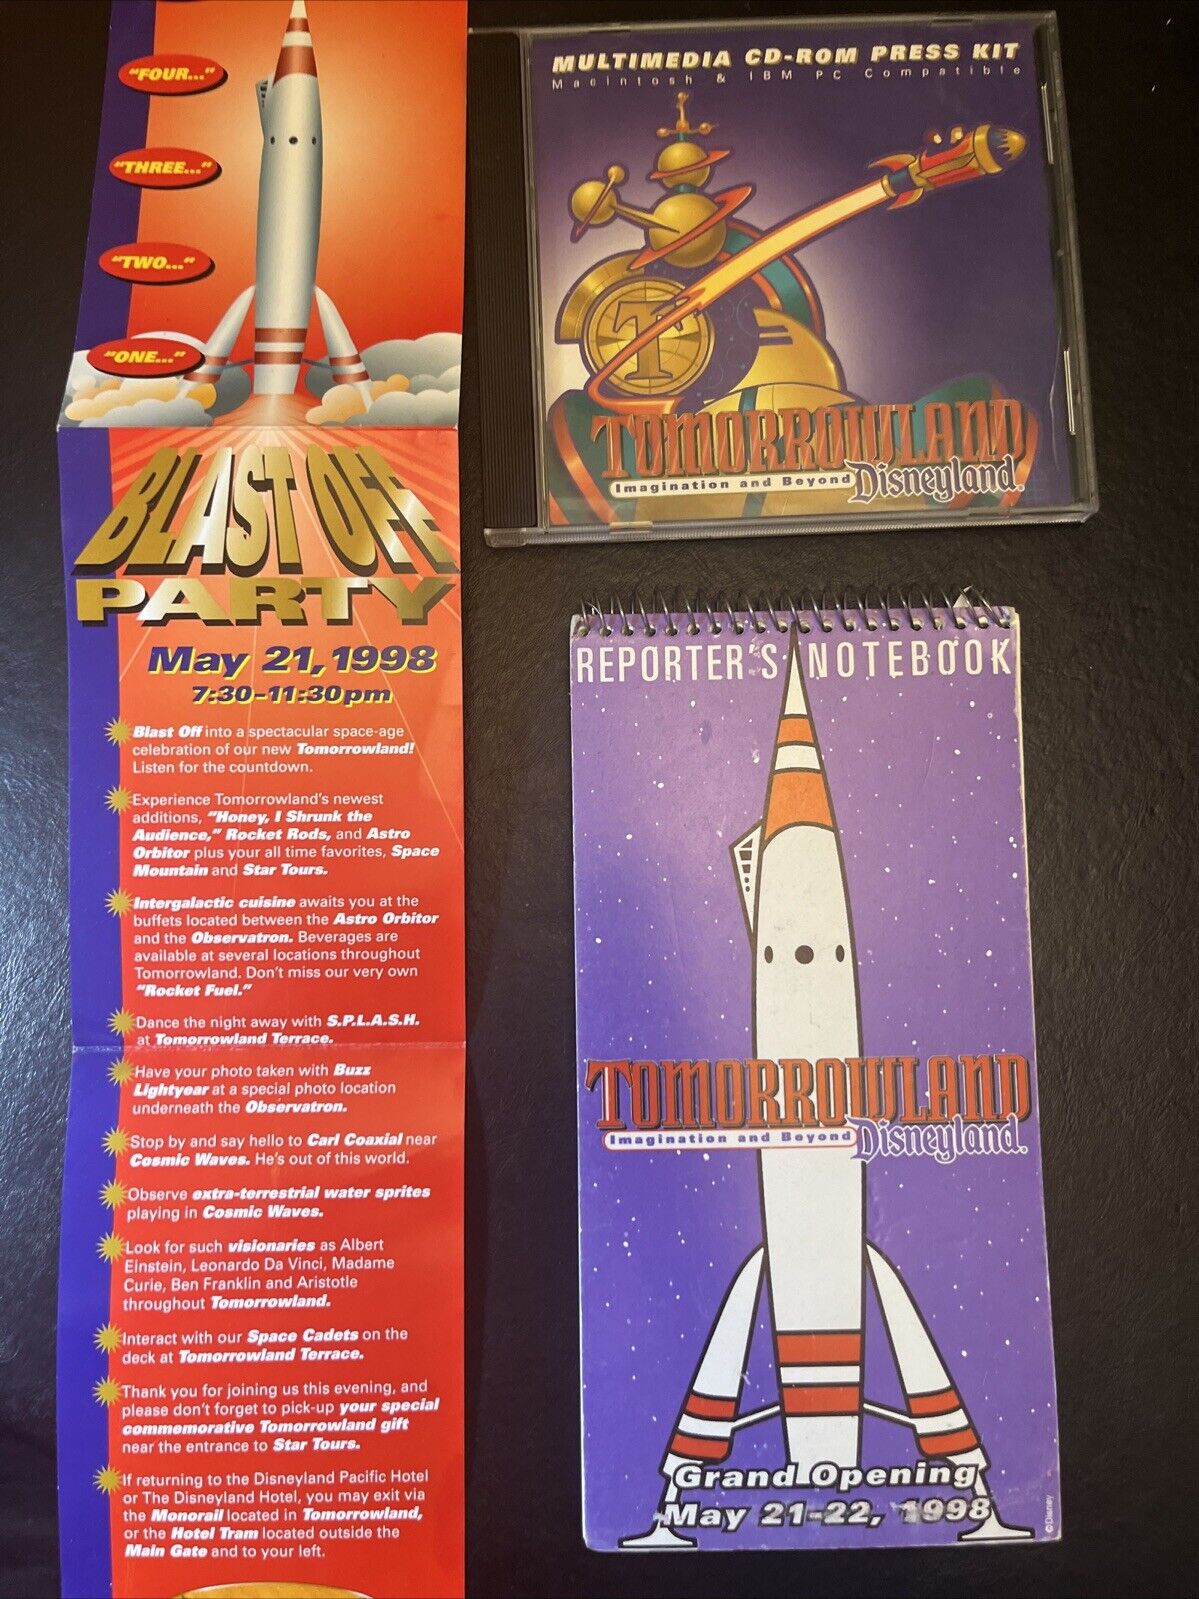 DISNEYLAND 1998 NEW TOMORROWLAND CD-ROM Press Kit Notebook & Blast Off Party